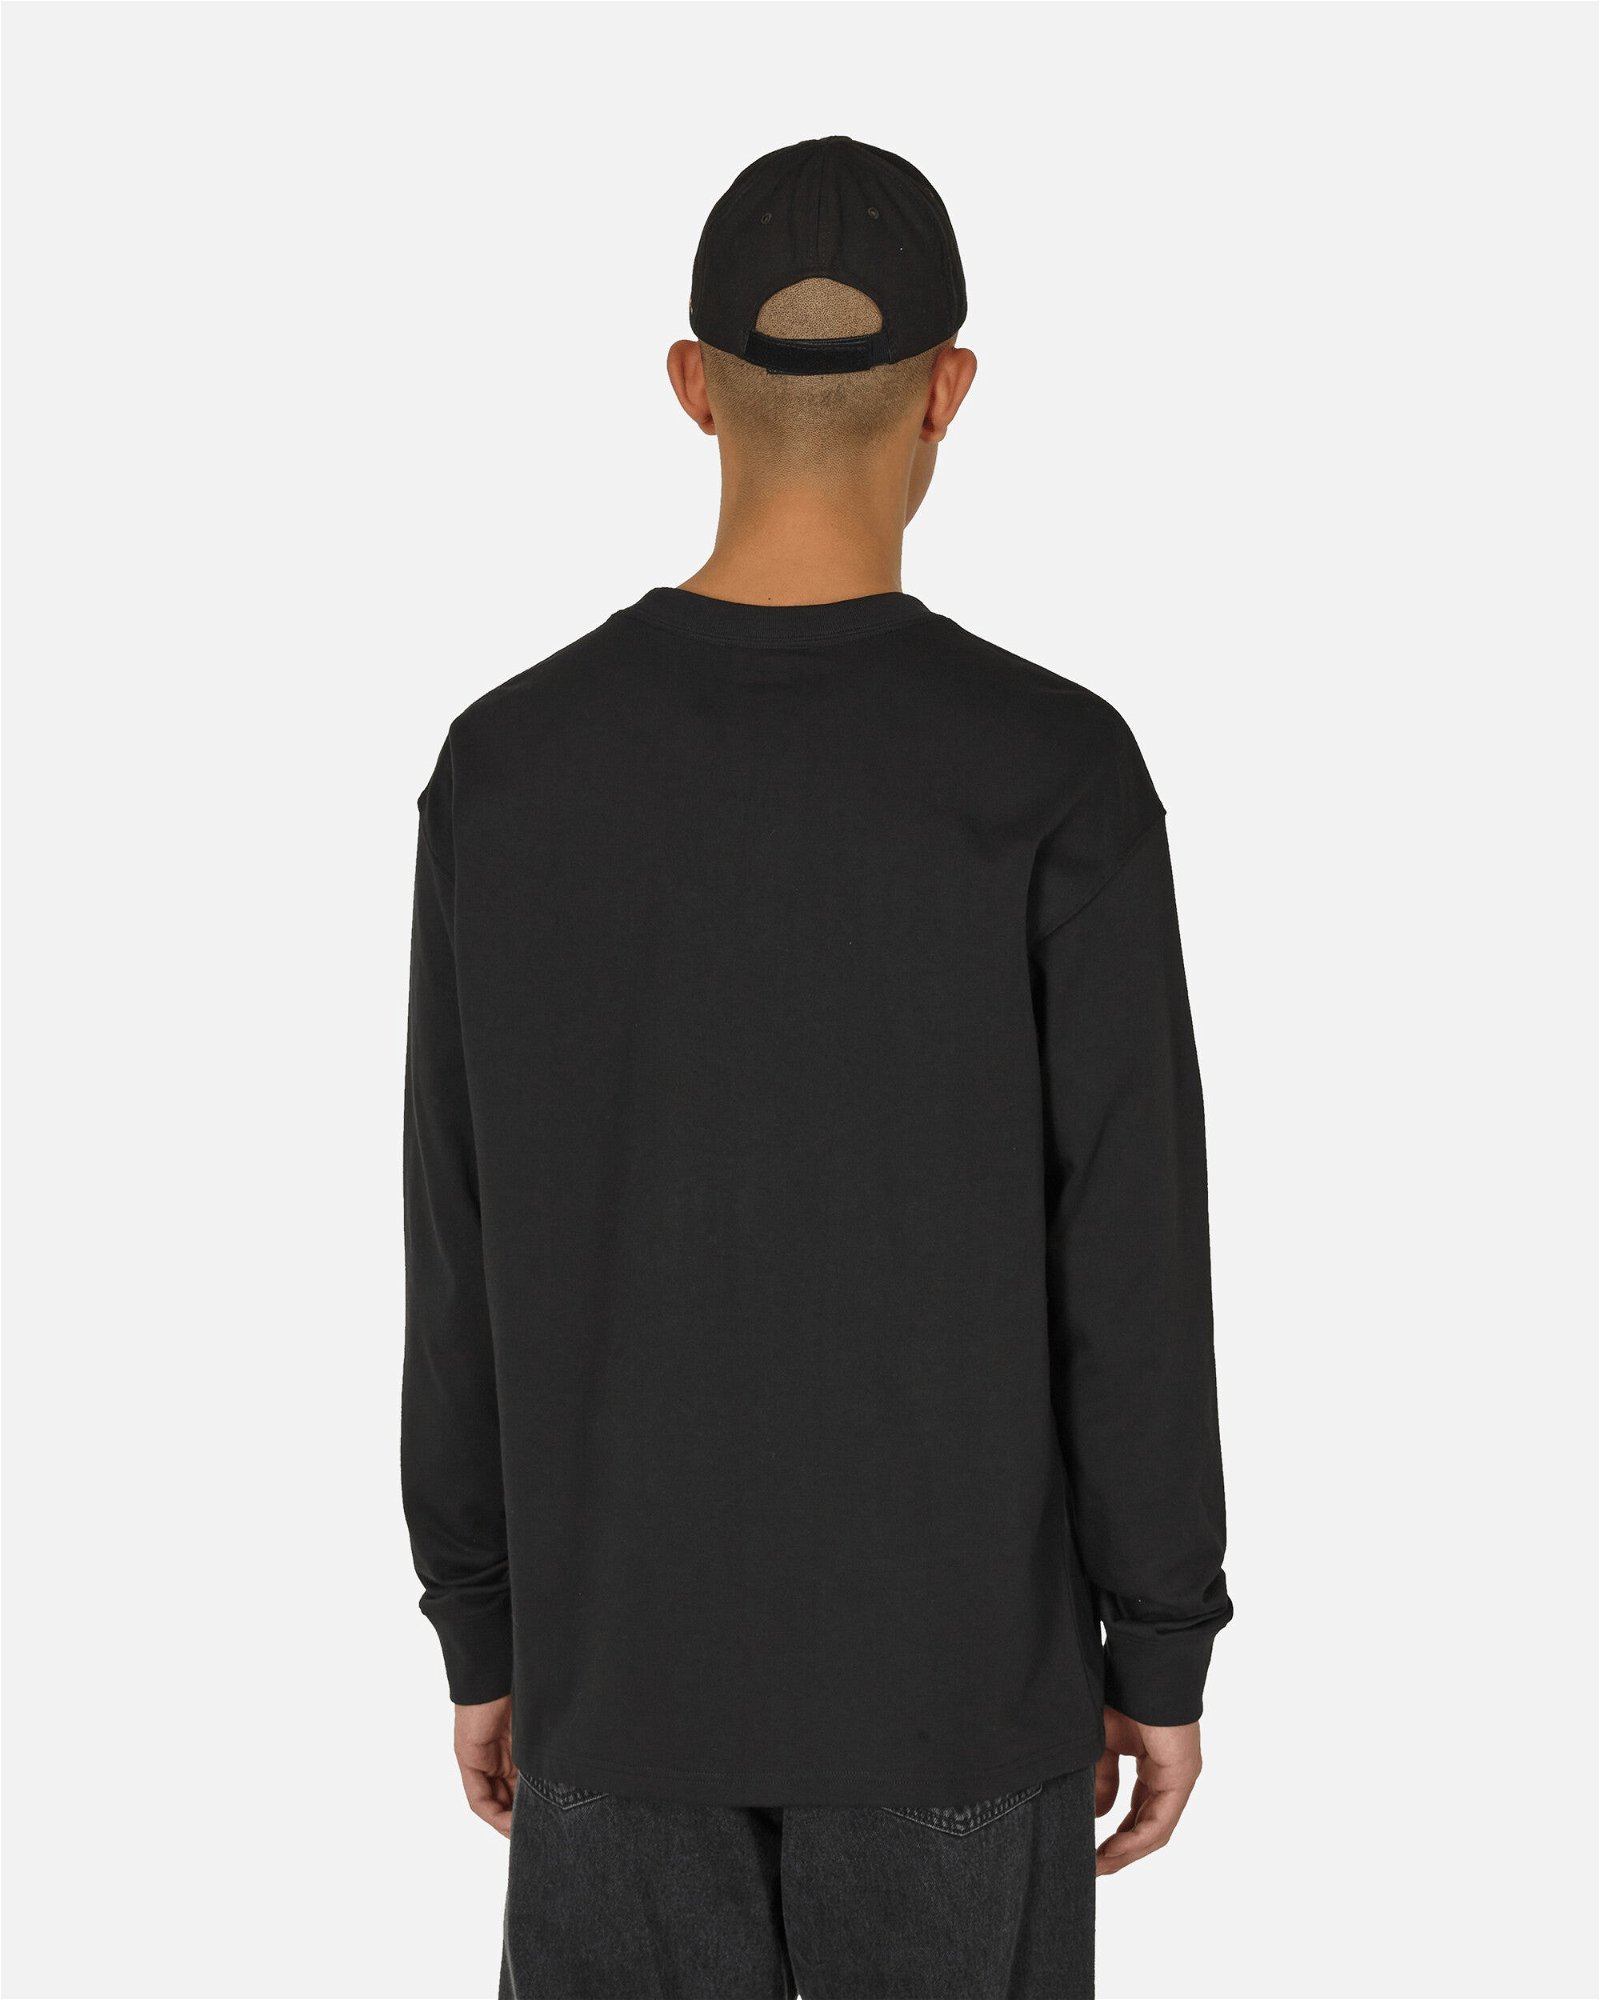 ACG Forest Longsleeve T-Shirt Black